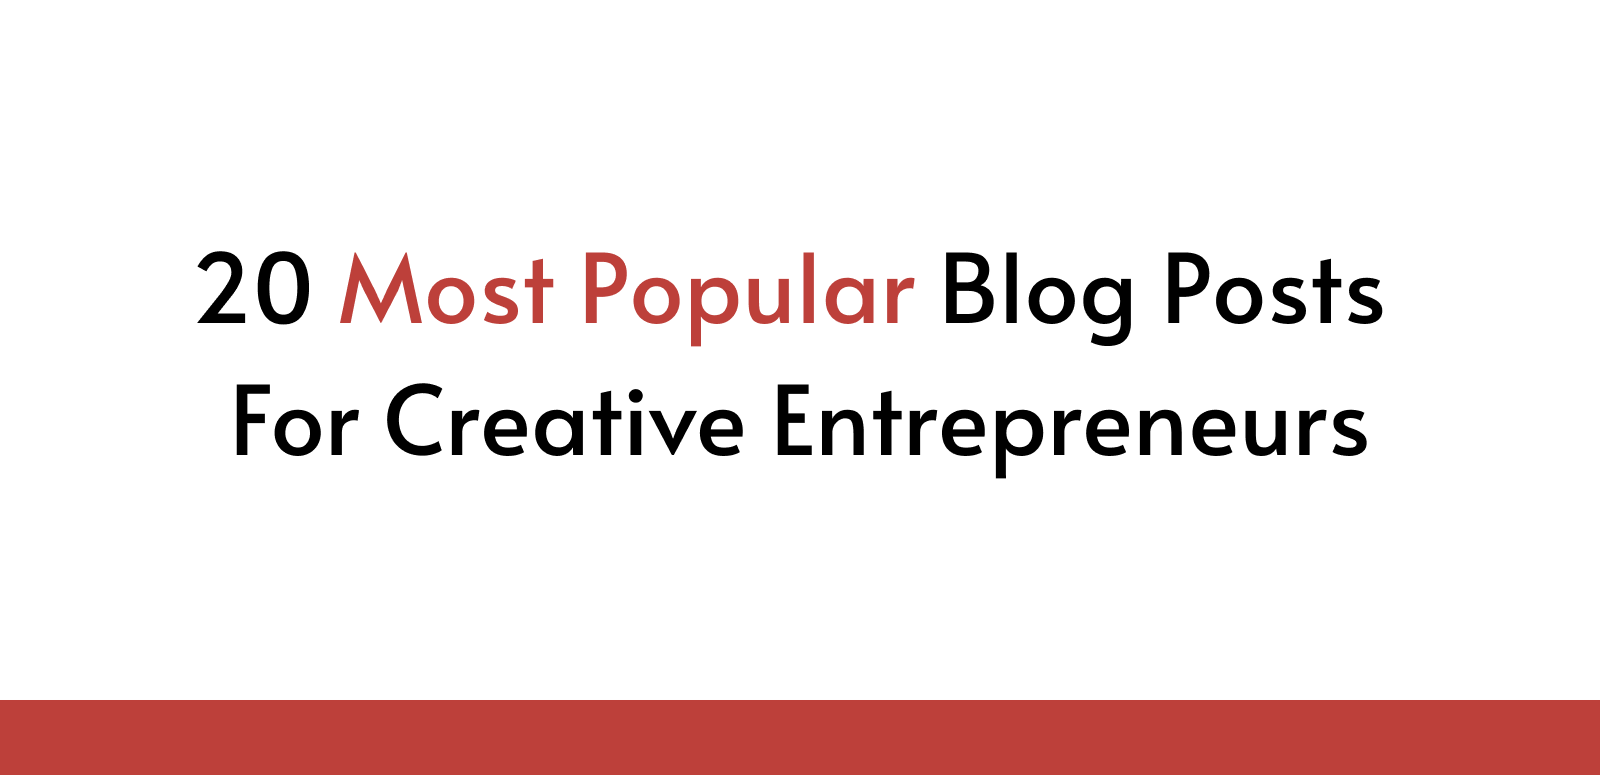 20 Most Popular Blog Posts For Creative Entrepreneurs